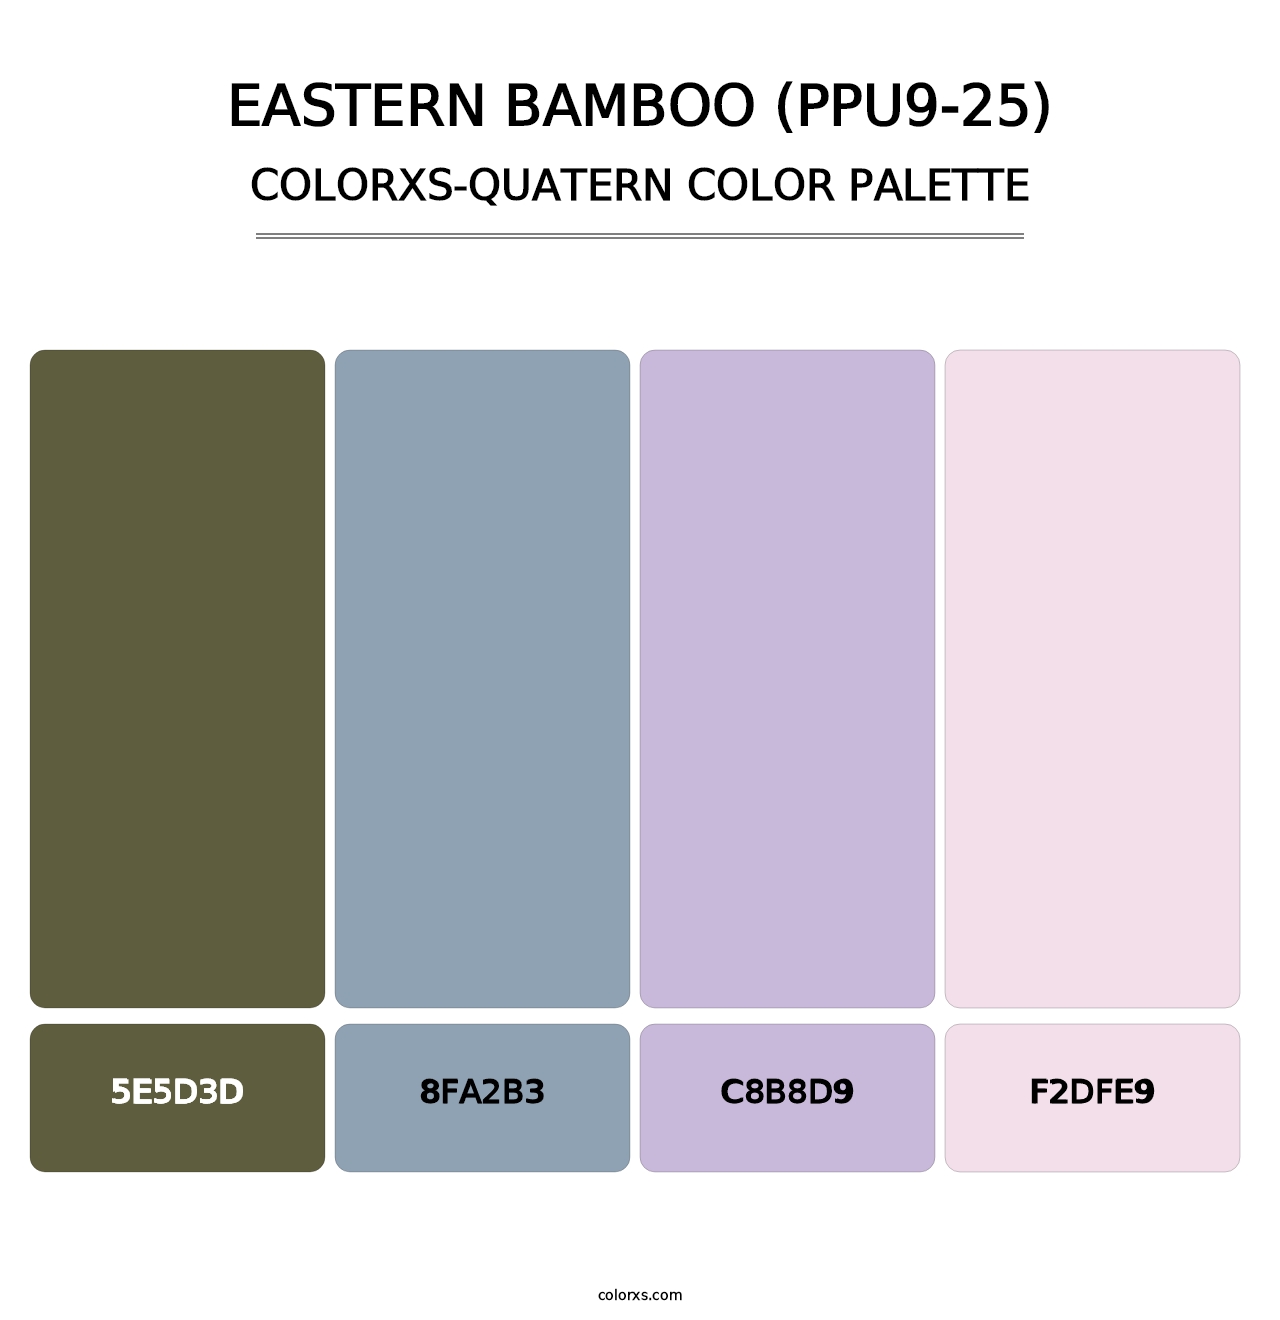 Eastern Bamboo (PPU9-25) - Colorxs Quatern Palette